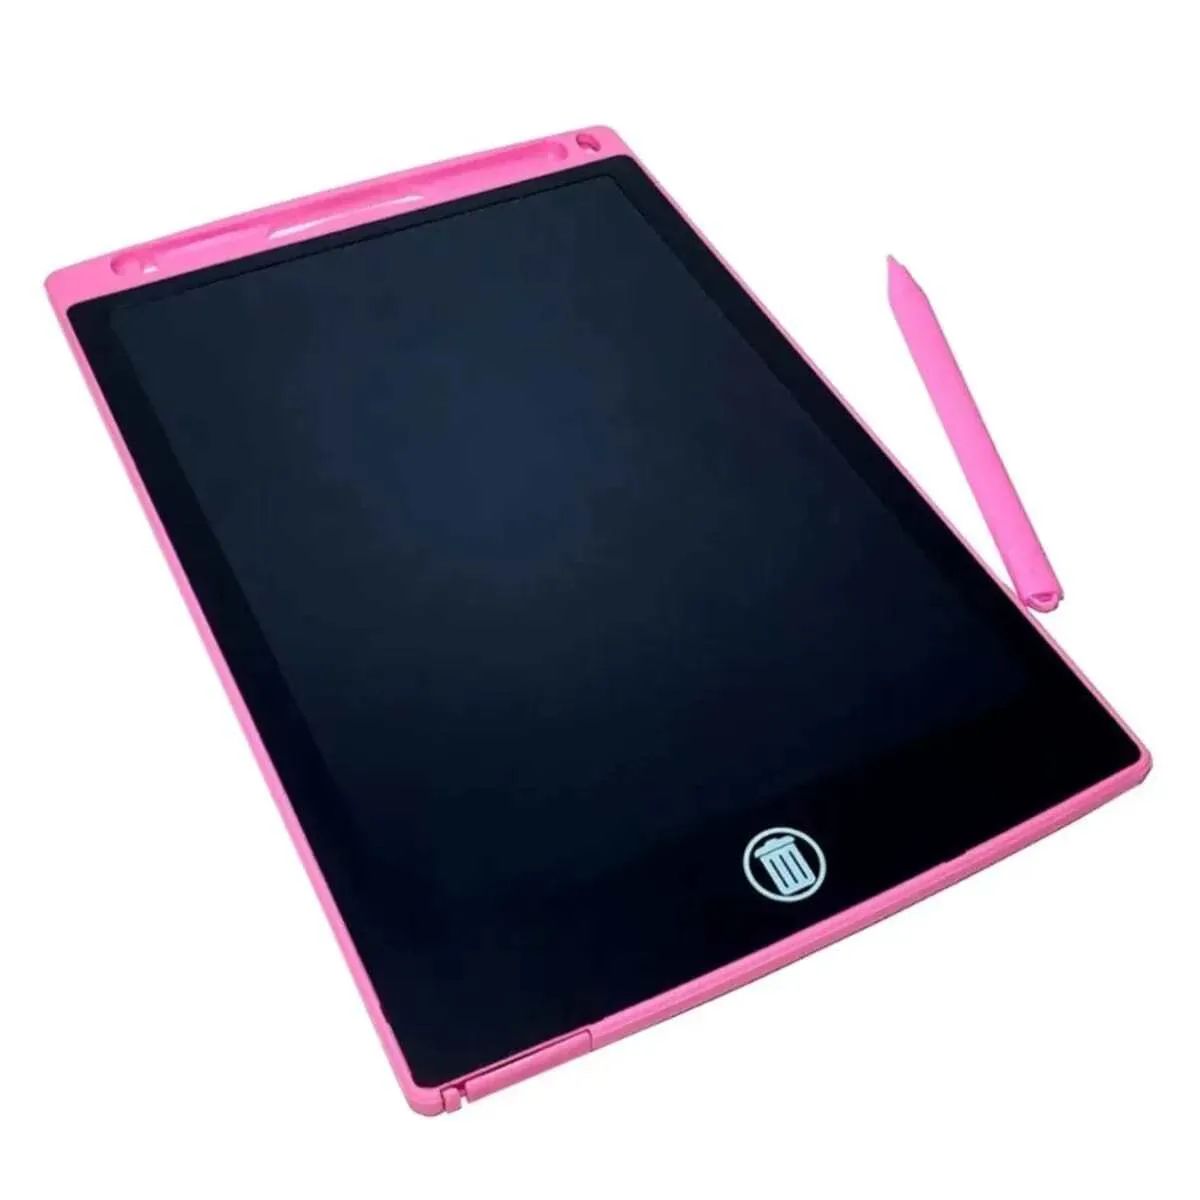 Графический планшет 8.5 LCD Writing Tablet Pink 00658 планшет для рисования xiaomi mijia lcd writing tablet 13 5 xmxhb02wc